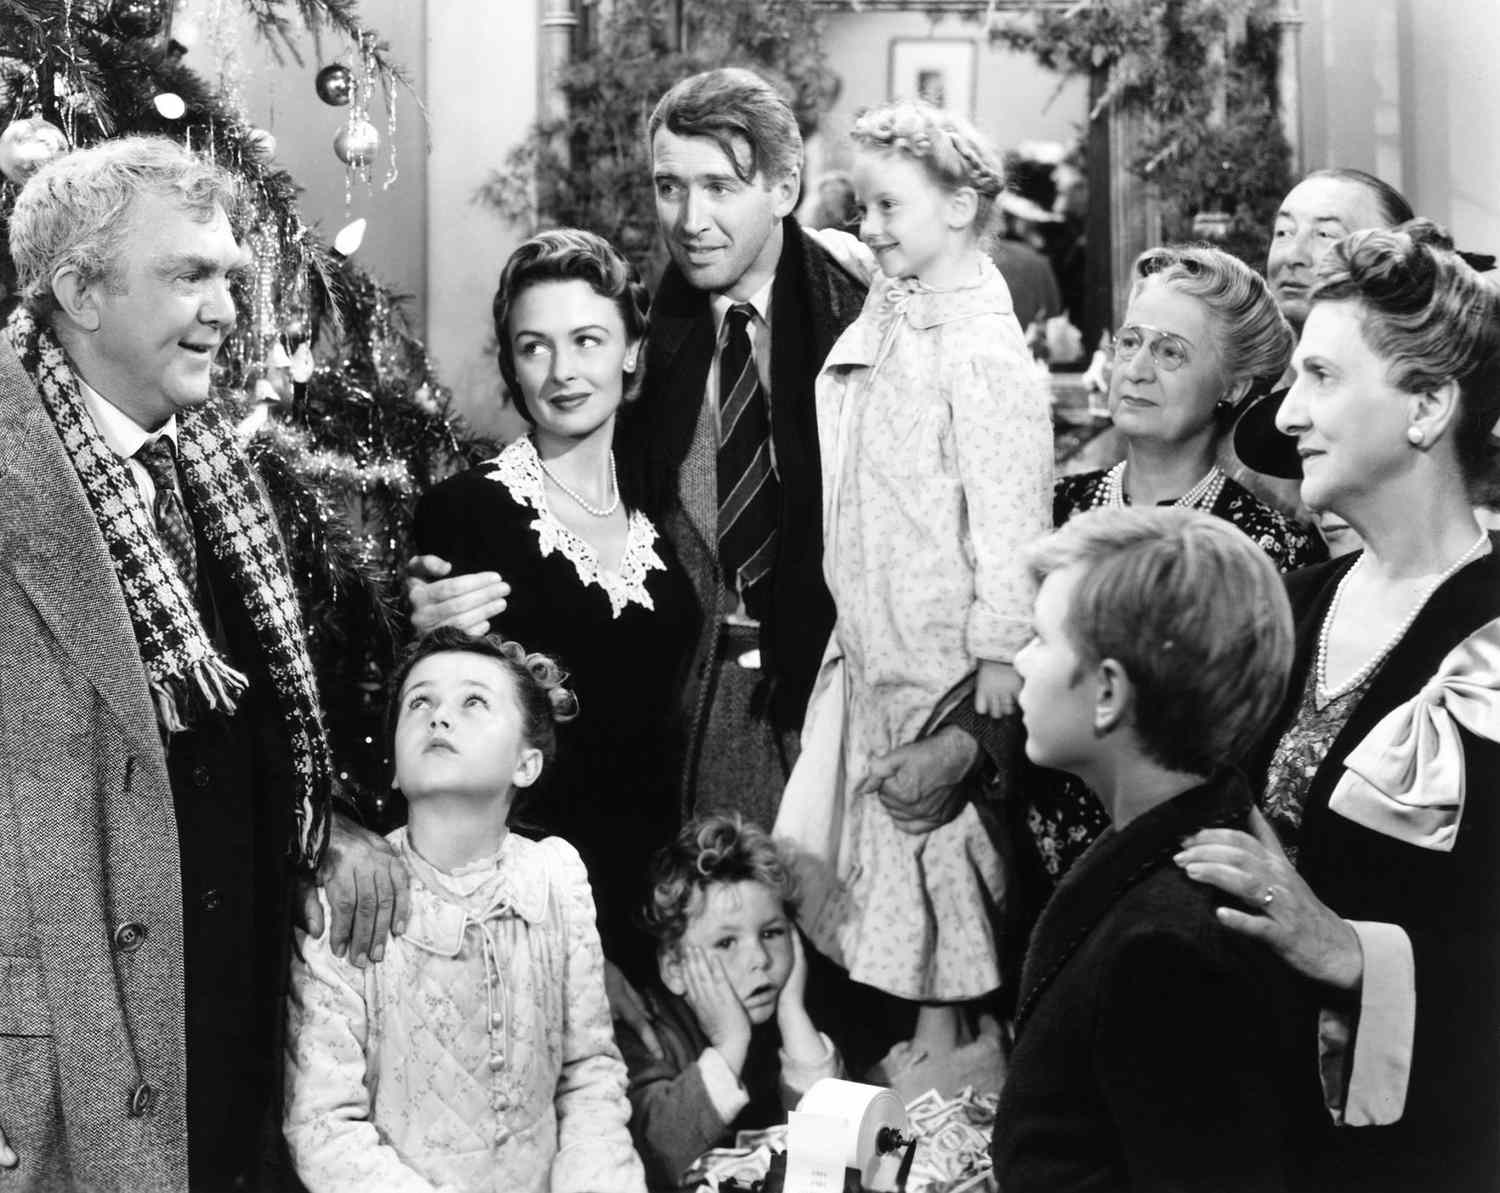 MOST WONDERFUL LIFE: George Bailey, It's a Wonderful Life (1946)